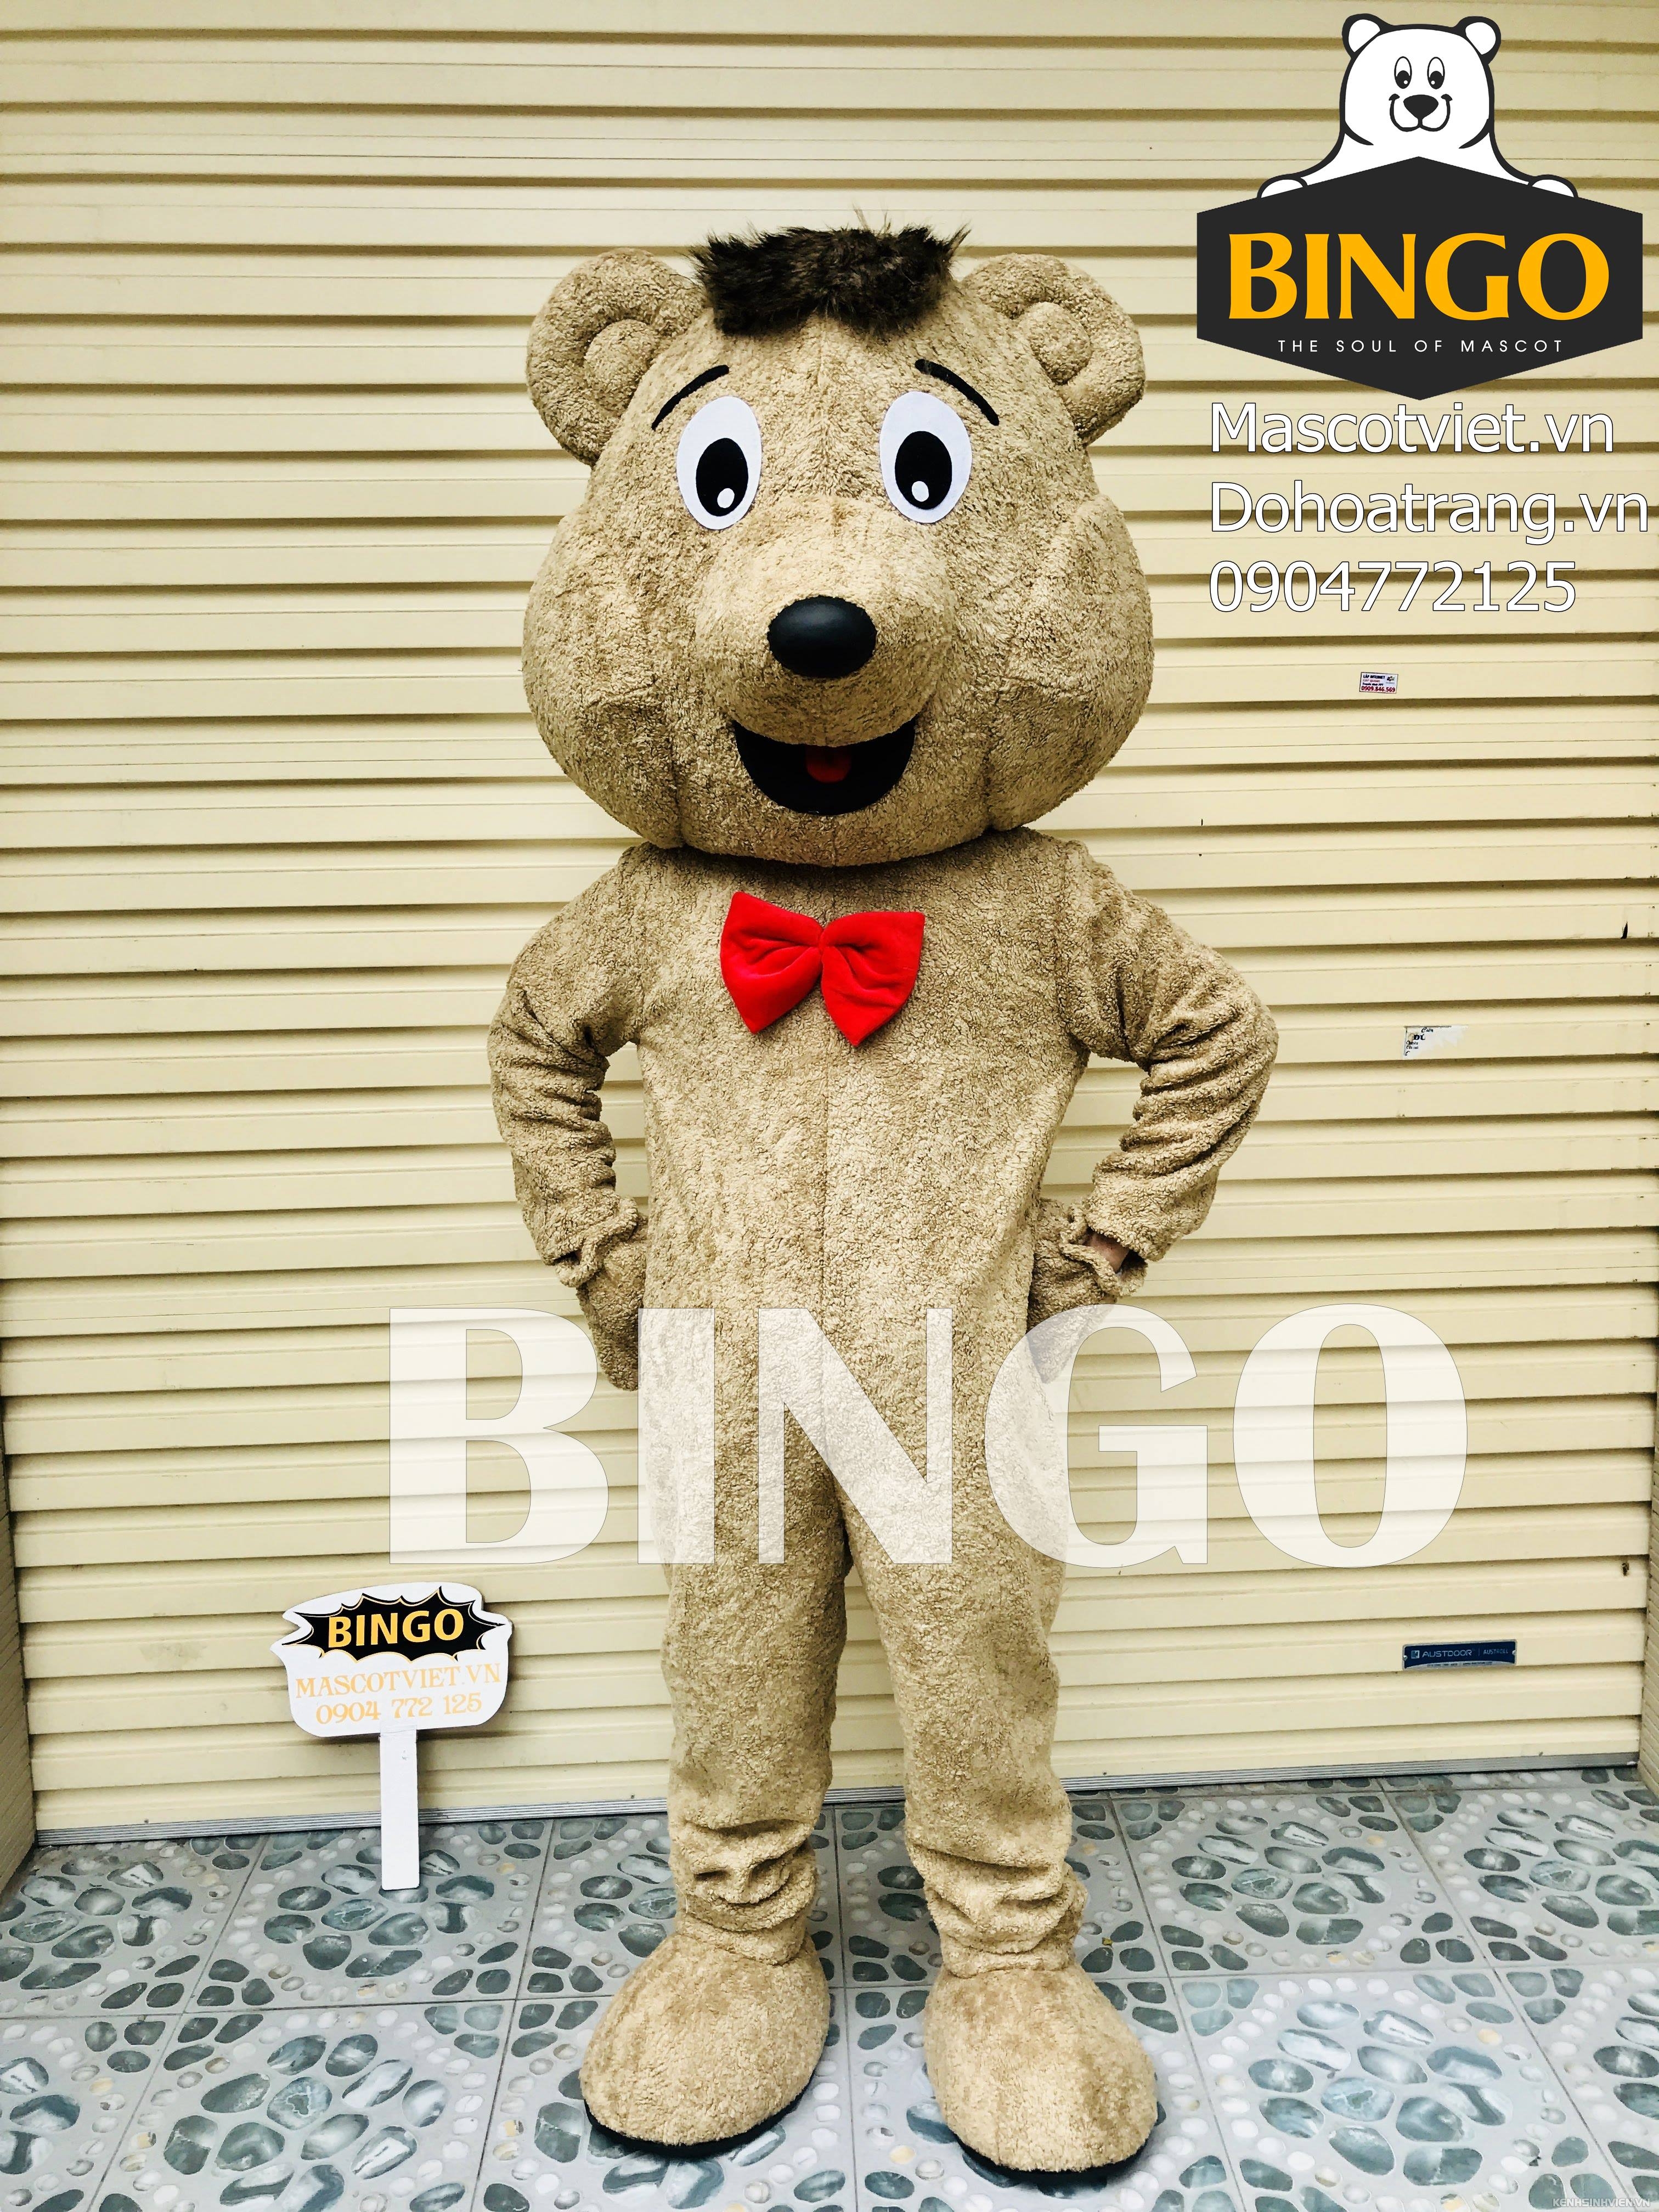 mascot-con-gau-05-bingo-costumes-bingo-costumes-0904772125.jpg